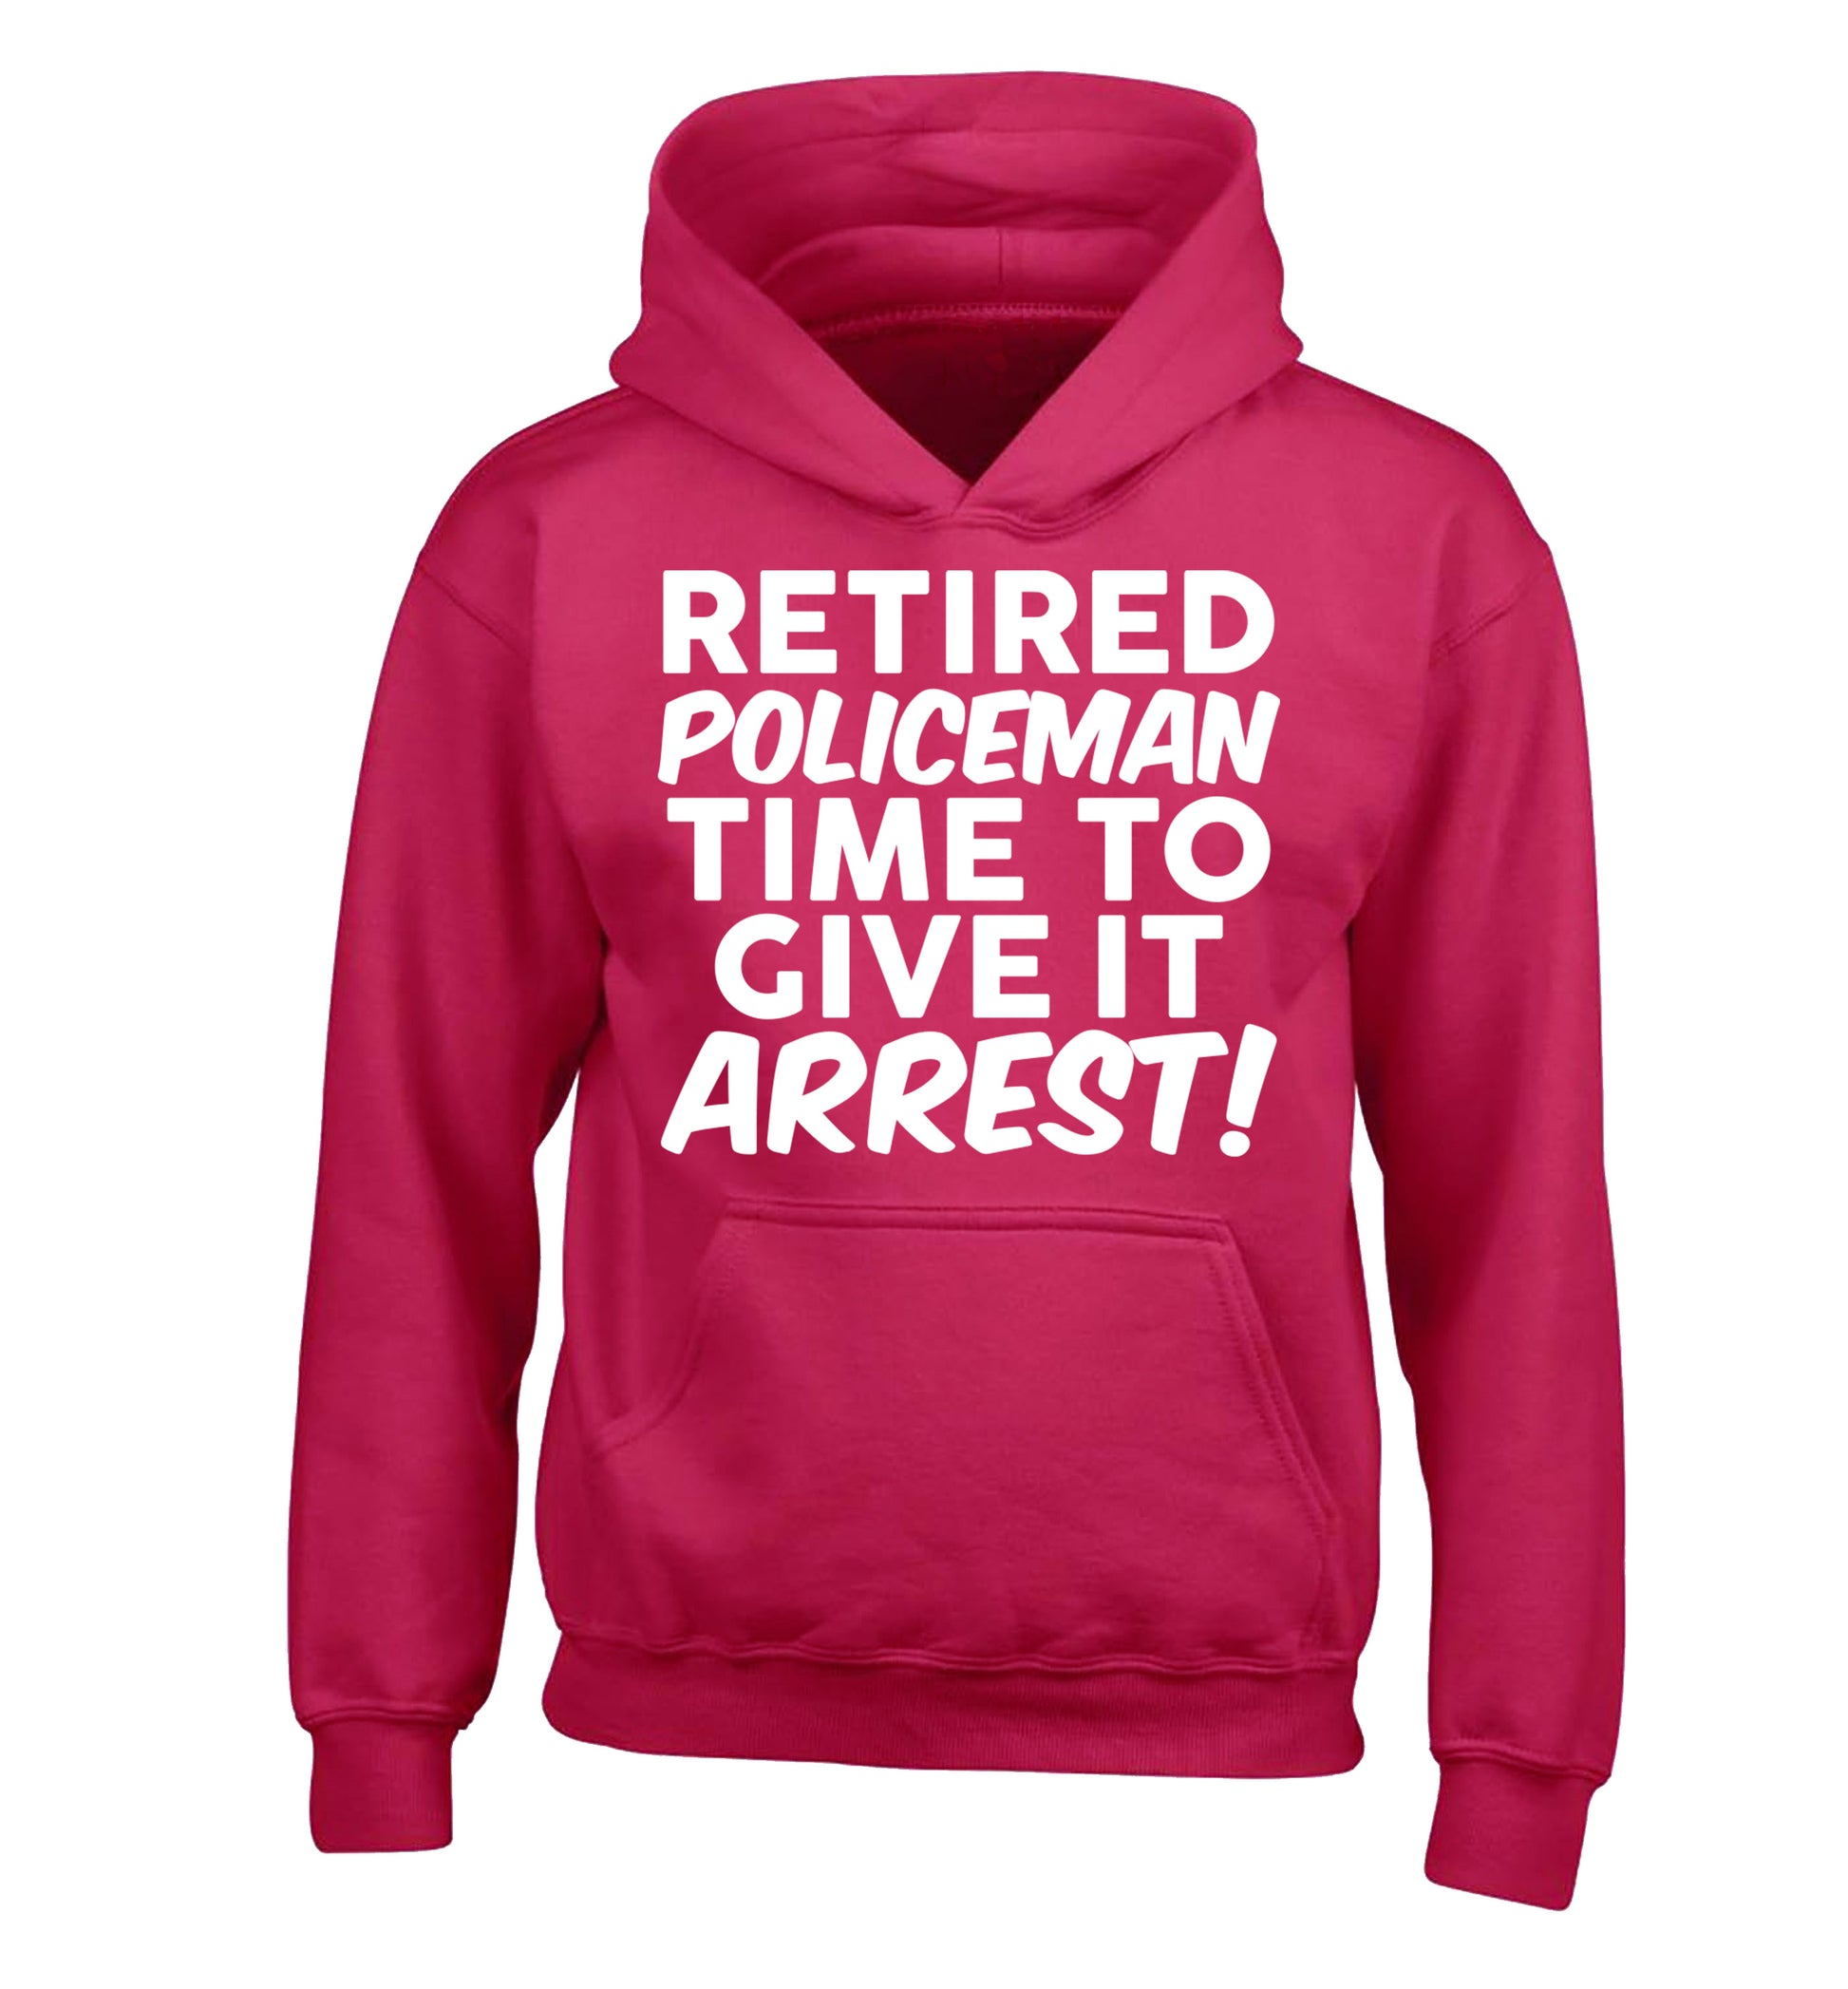 Retired policeman give it arresst! children's pink hoodie 12-13 Years